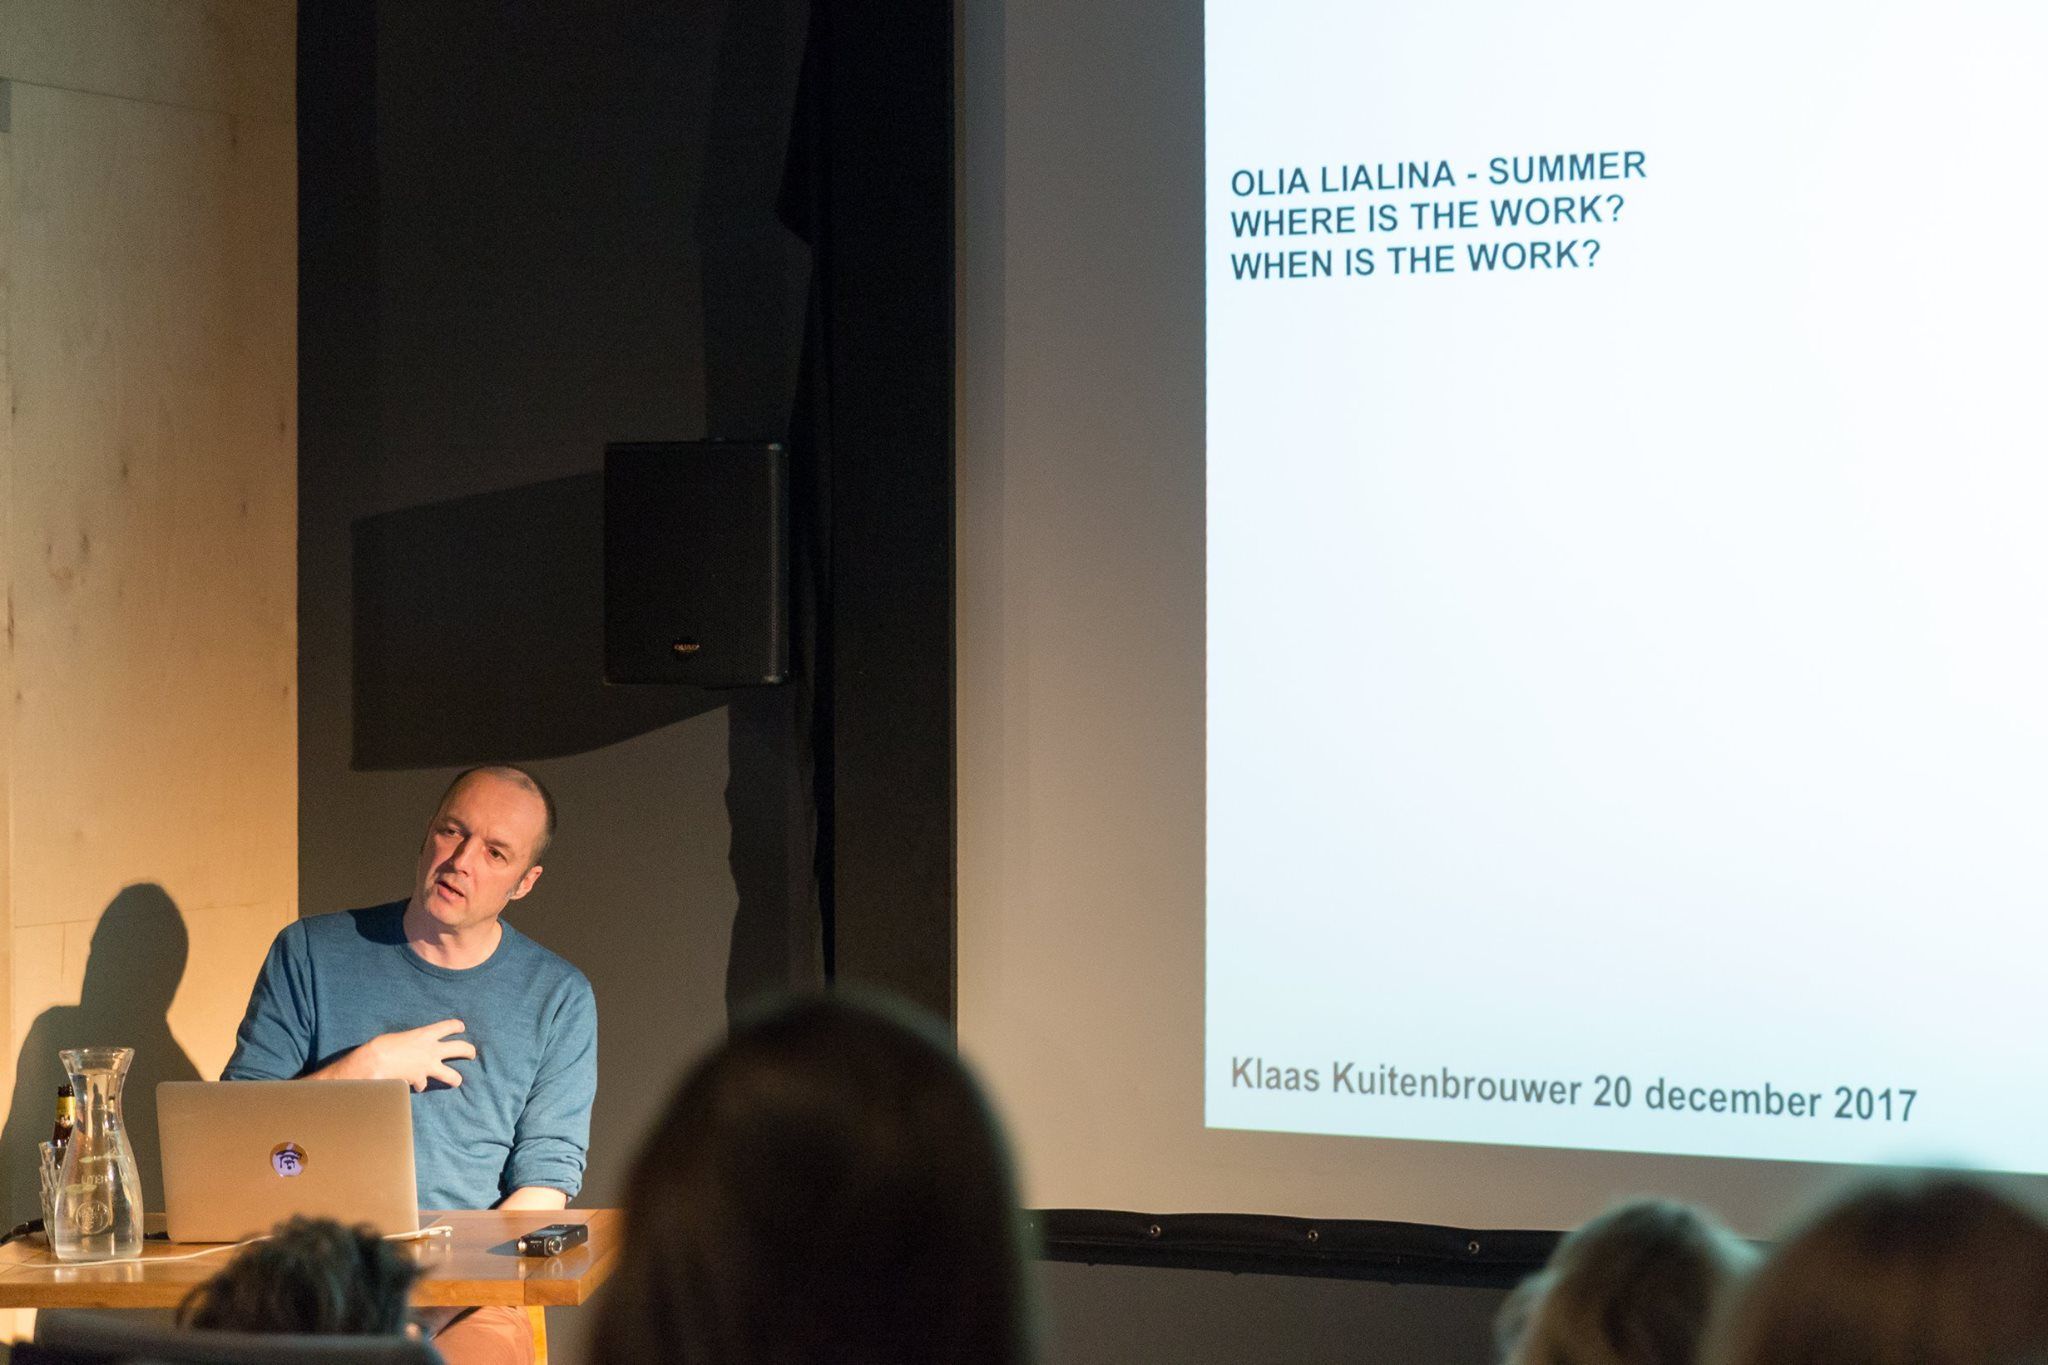 Klaas Kuitenbrouwer discusses Olia Lialiana's Summer, 2013